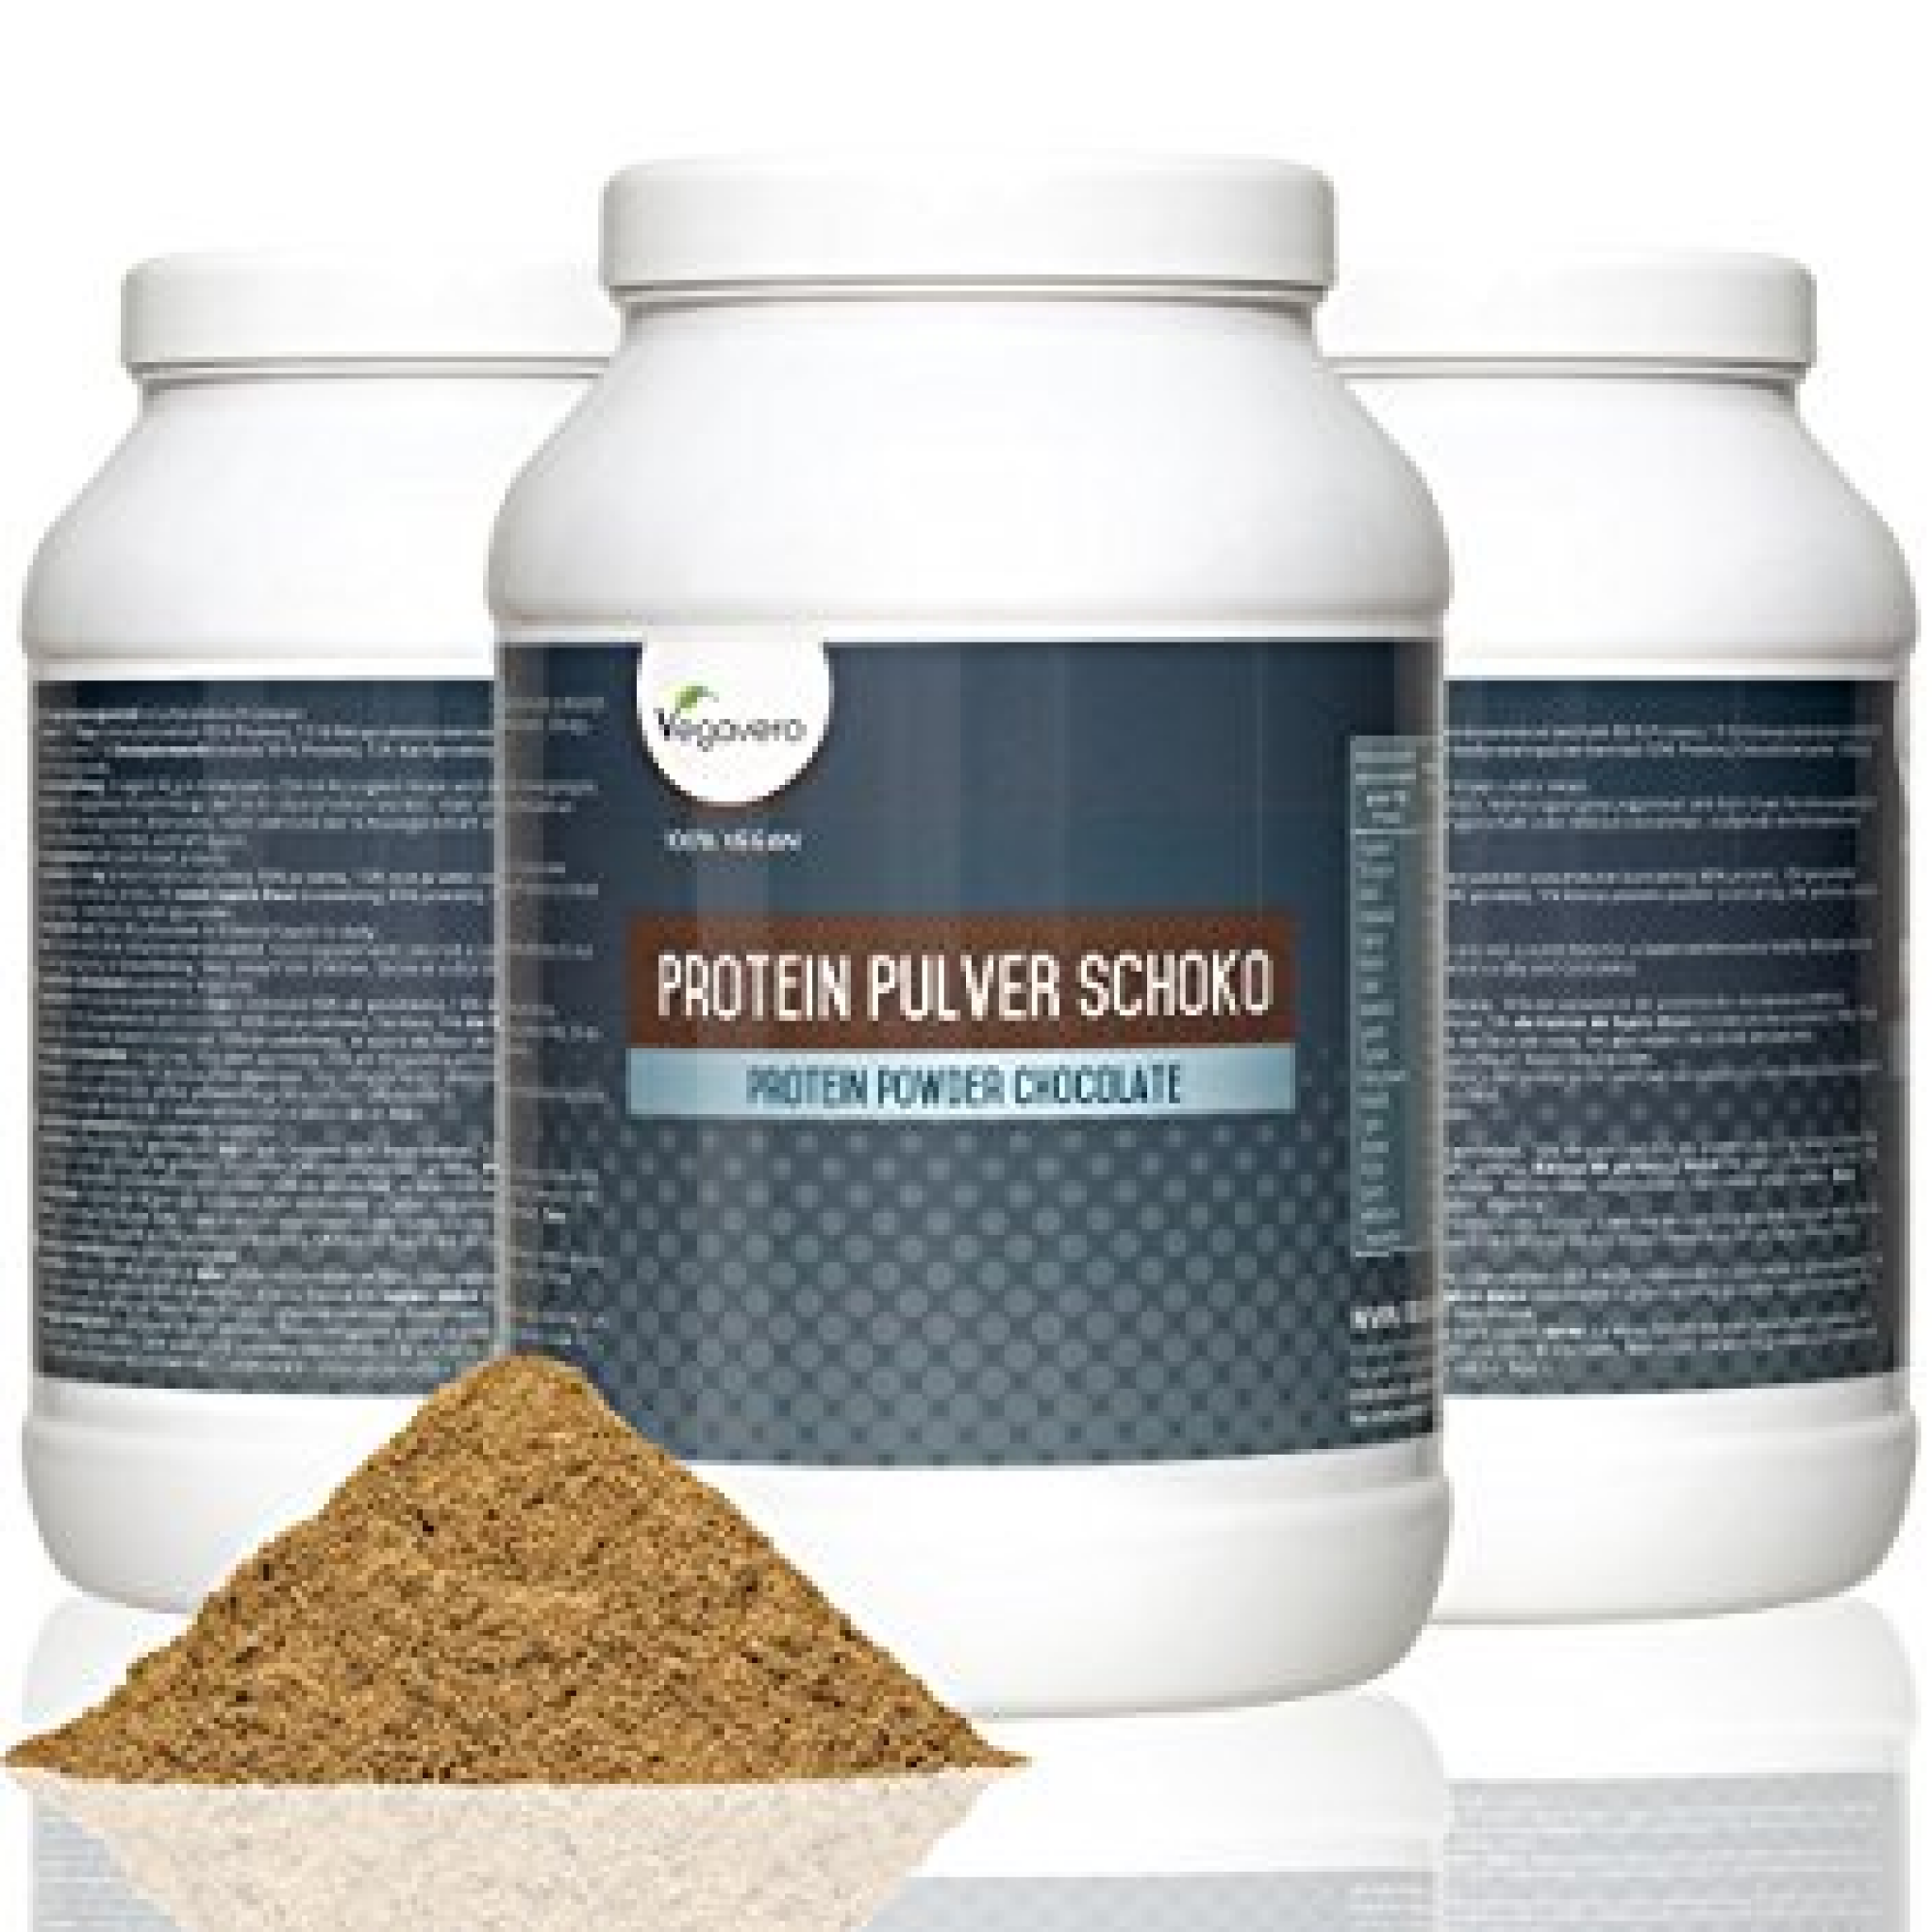 Vegavero protein powder.